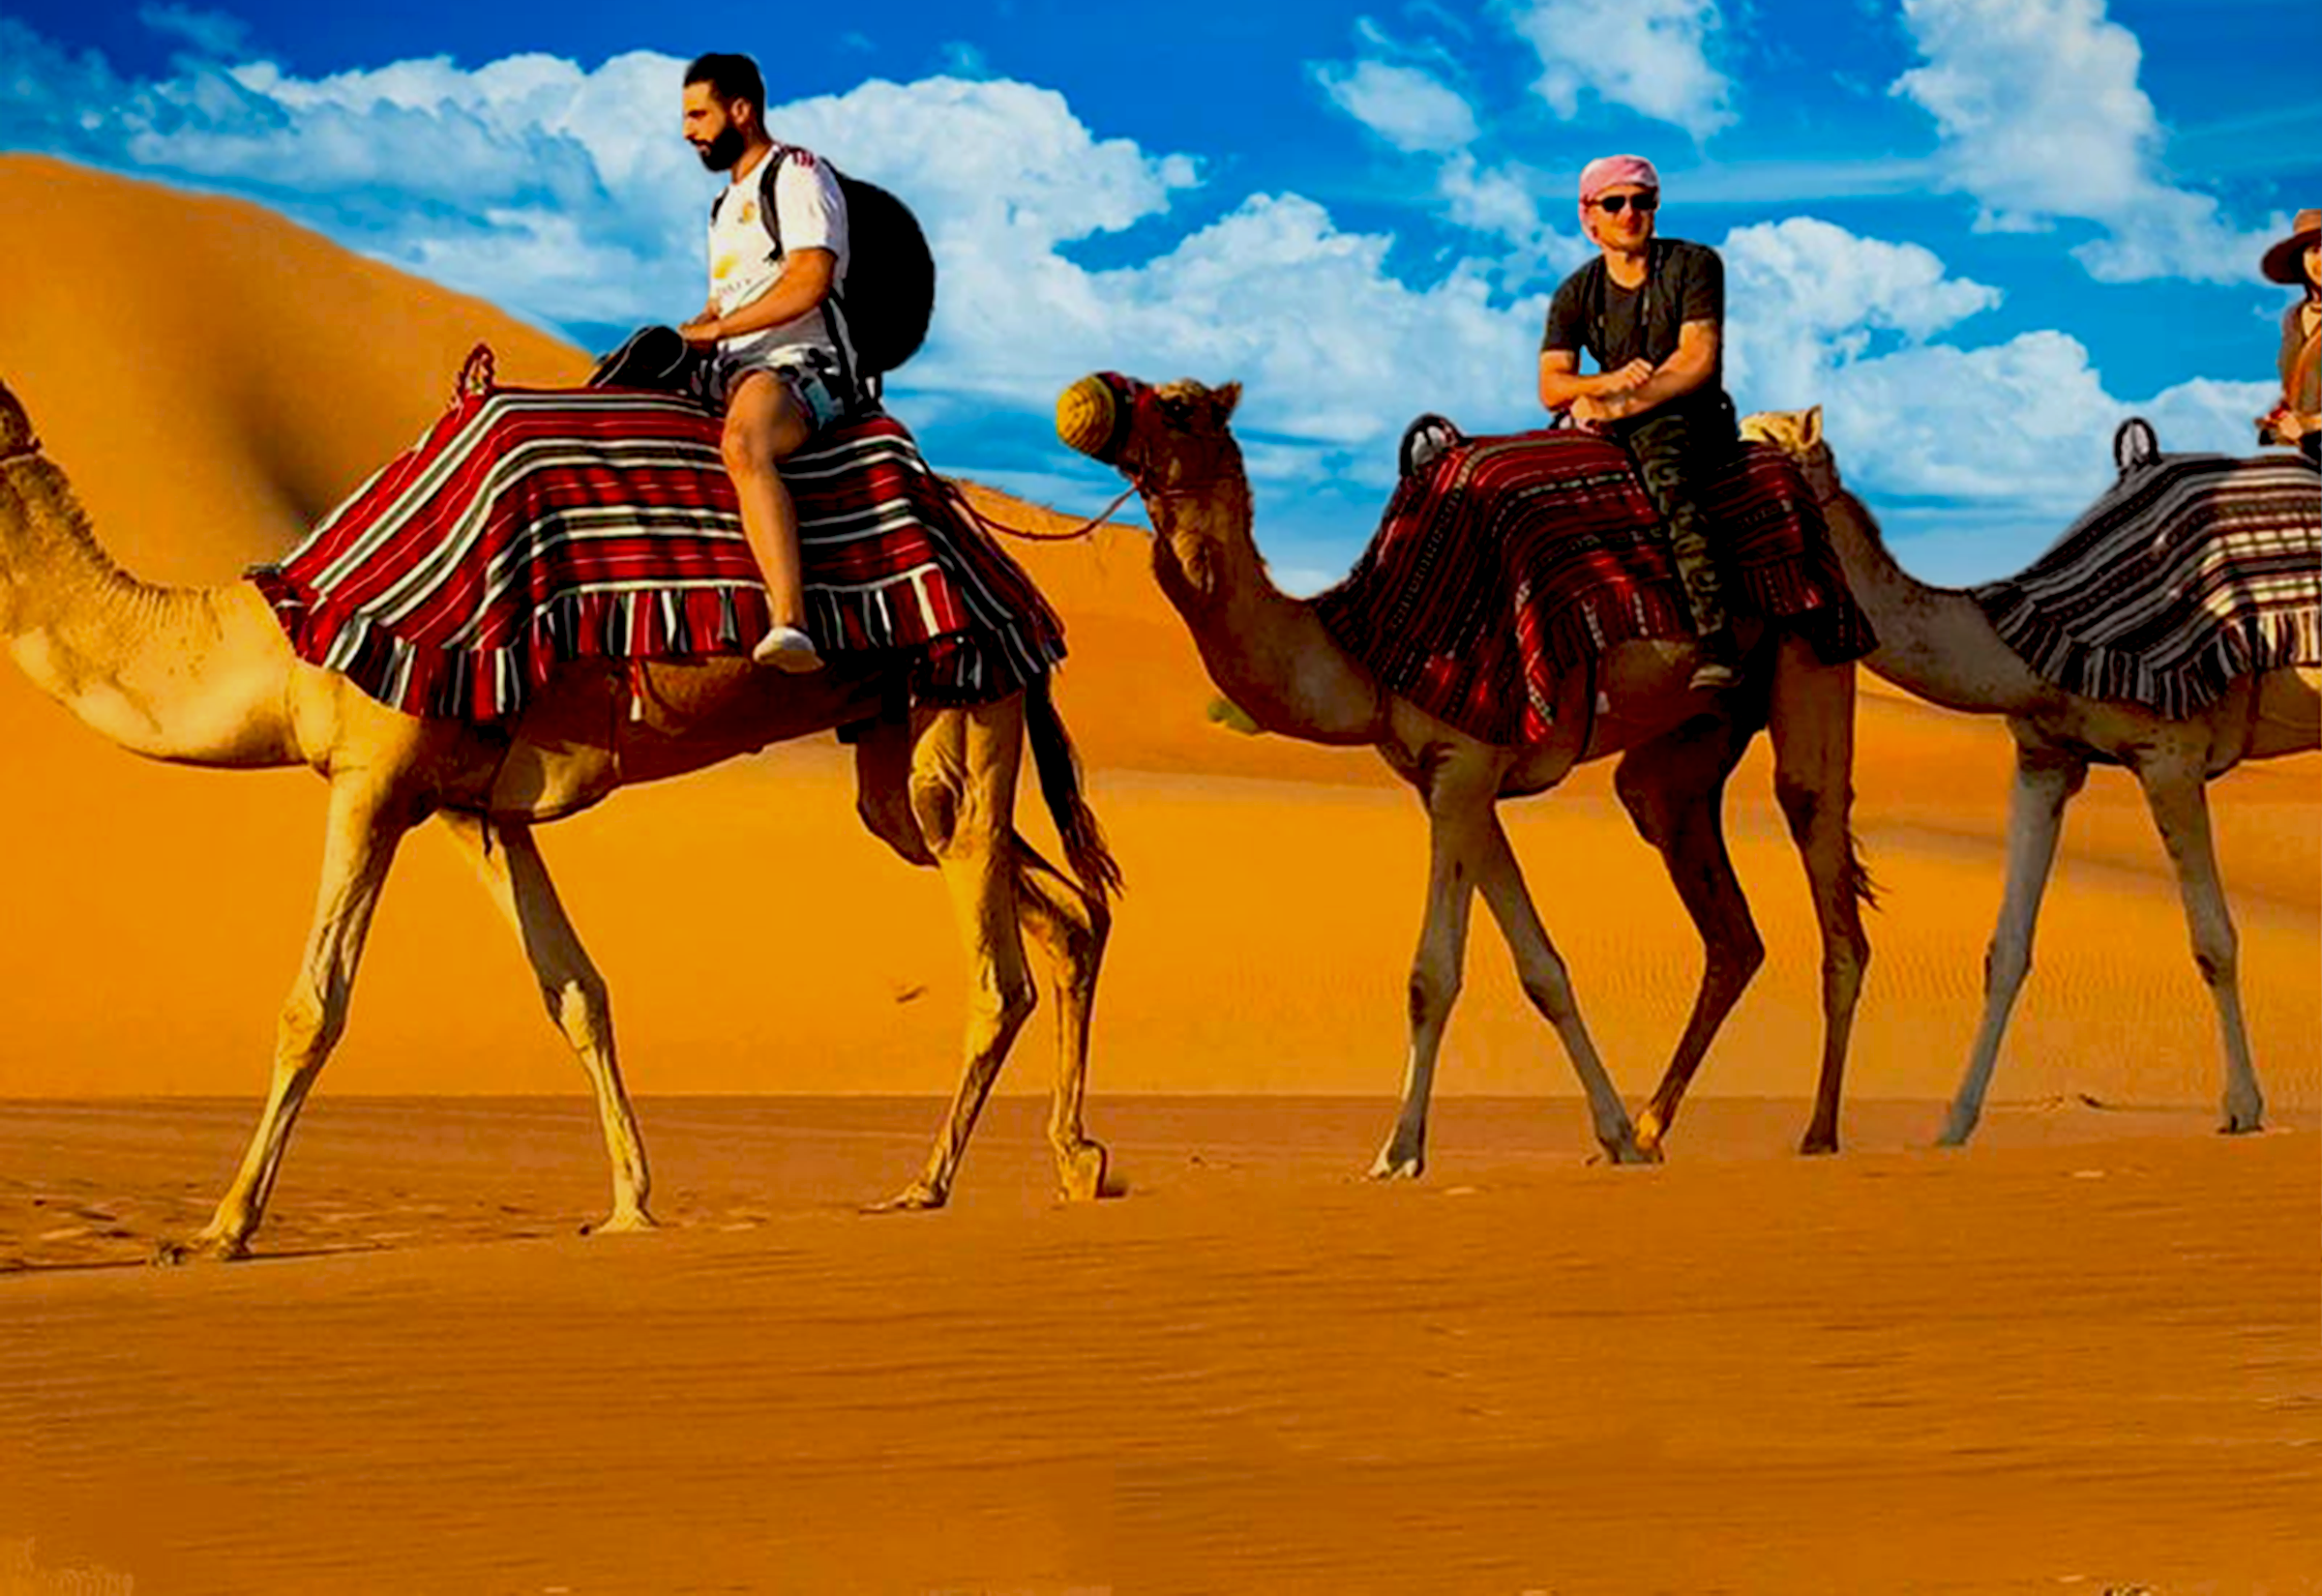 Read more about the article How To Have A Memorable Dubai Desert Safari Tour!